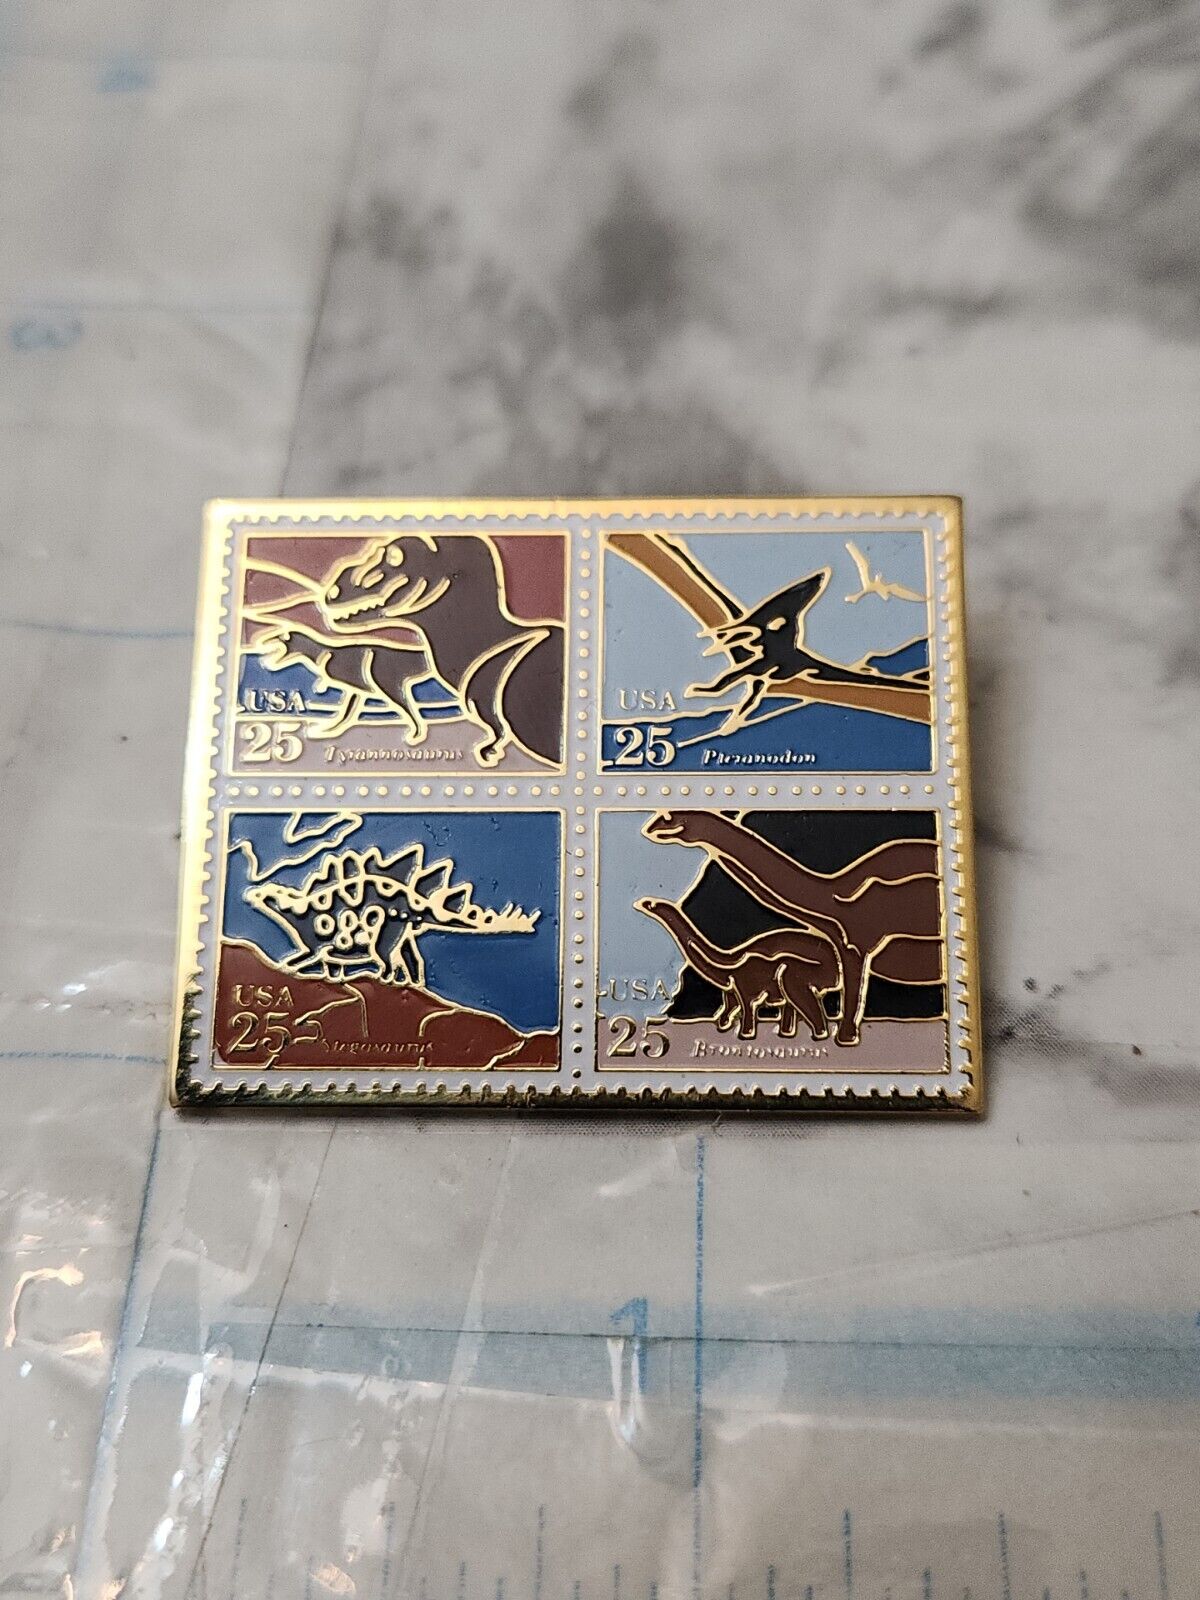 USA 1989 25 Cent Replical Postal Service Dinosaur Postage Stamp Lapel Pin